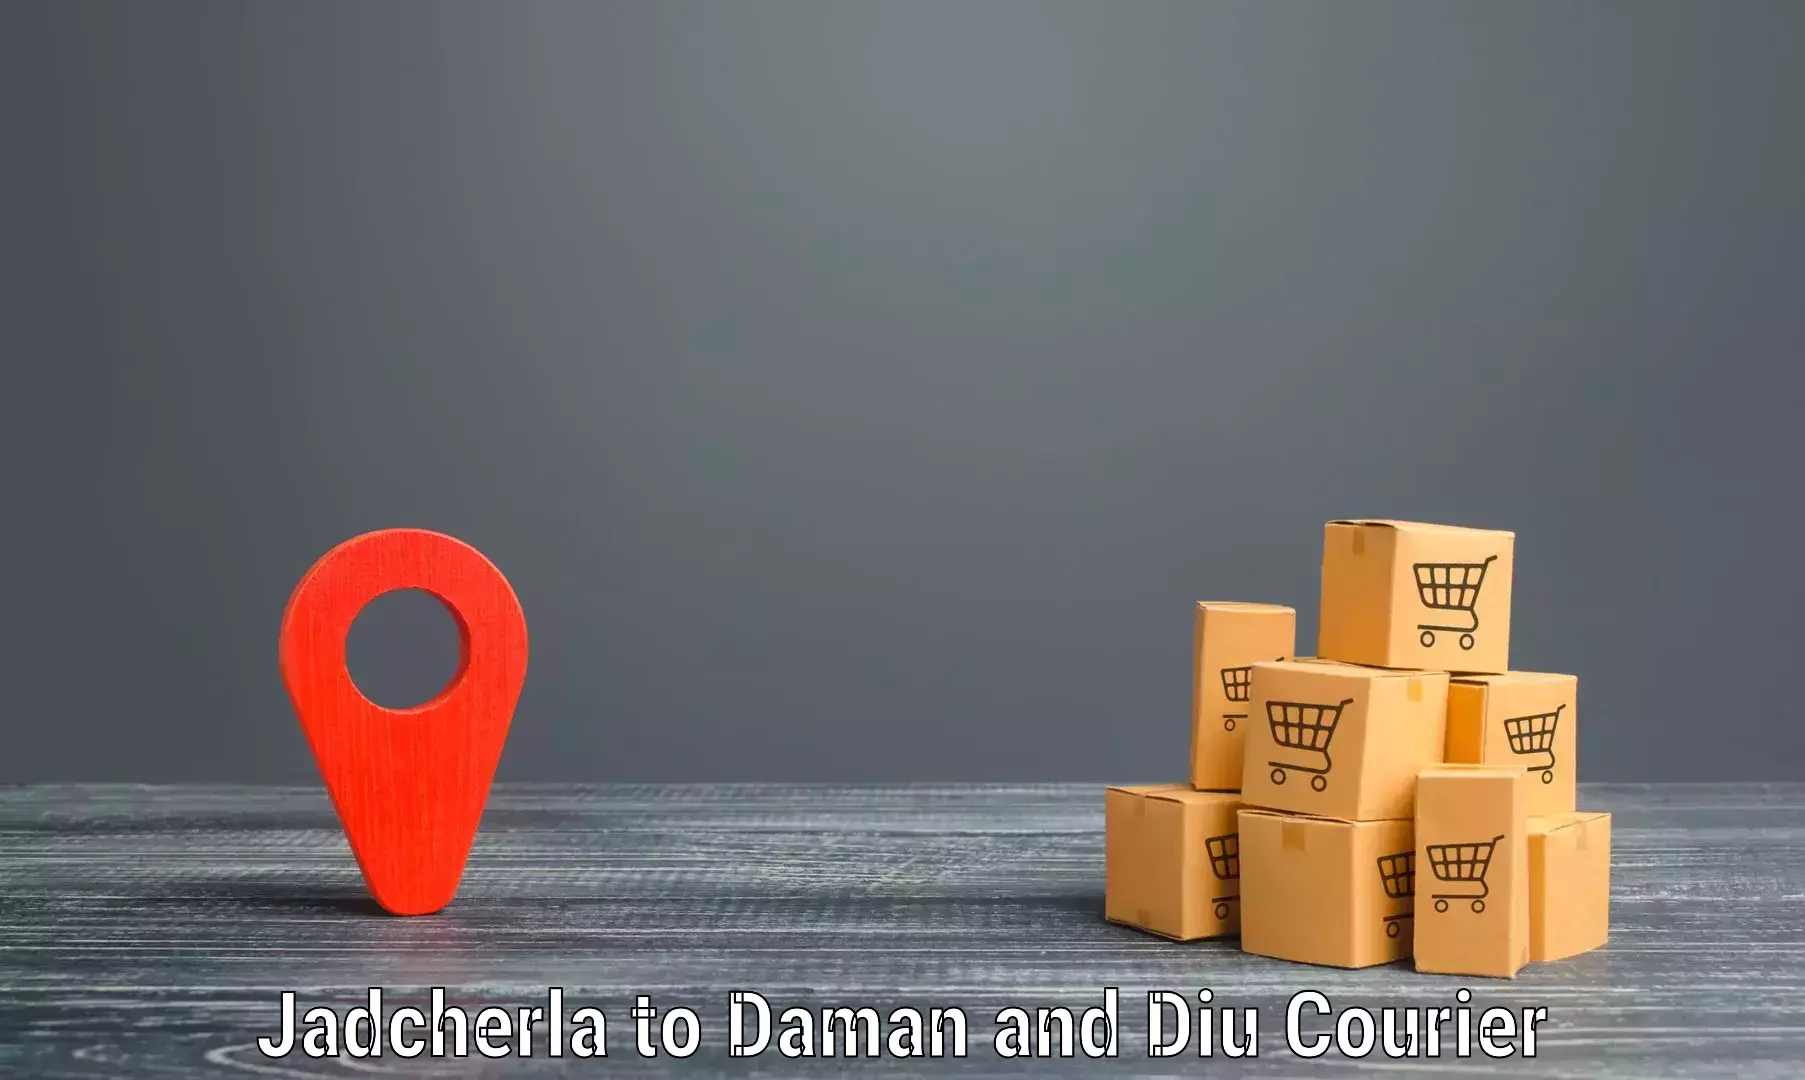 Delivery service partnership Jadcherla to Daman